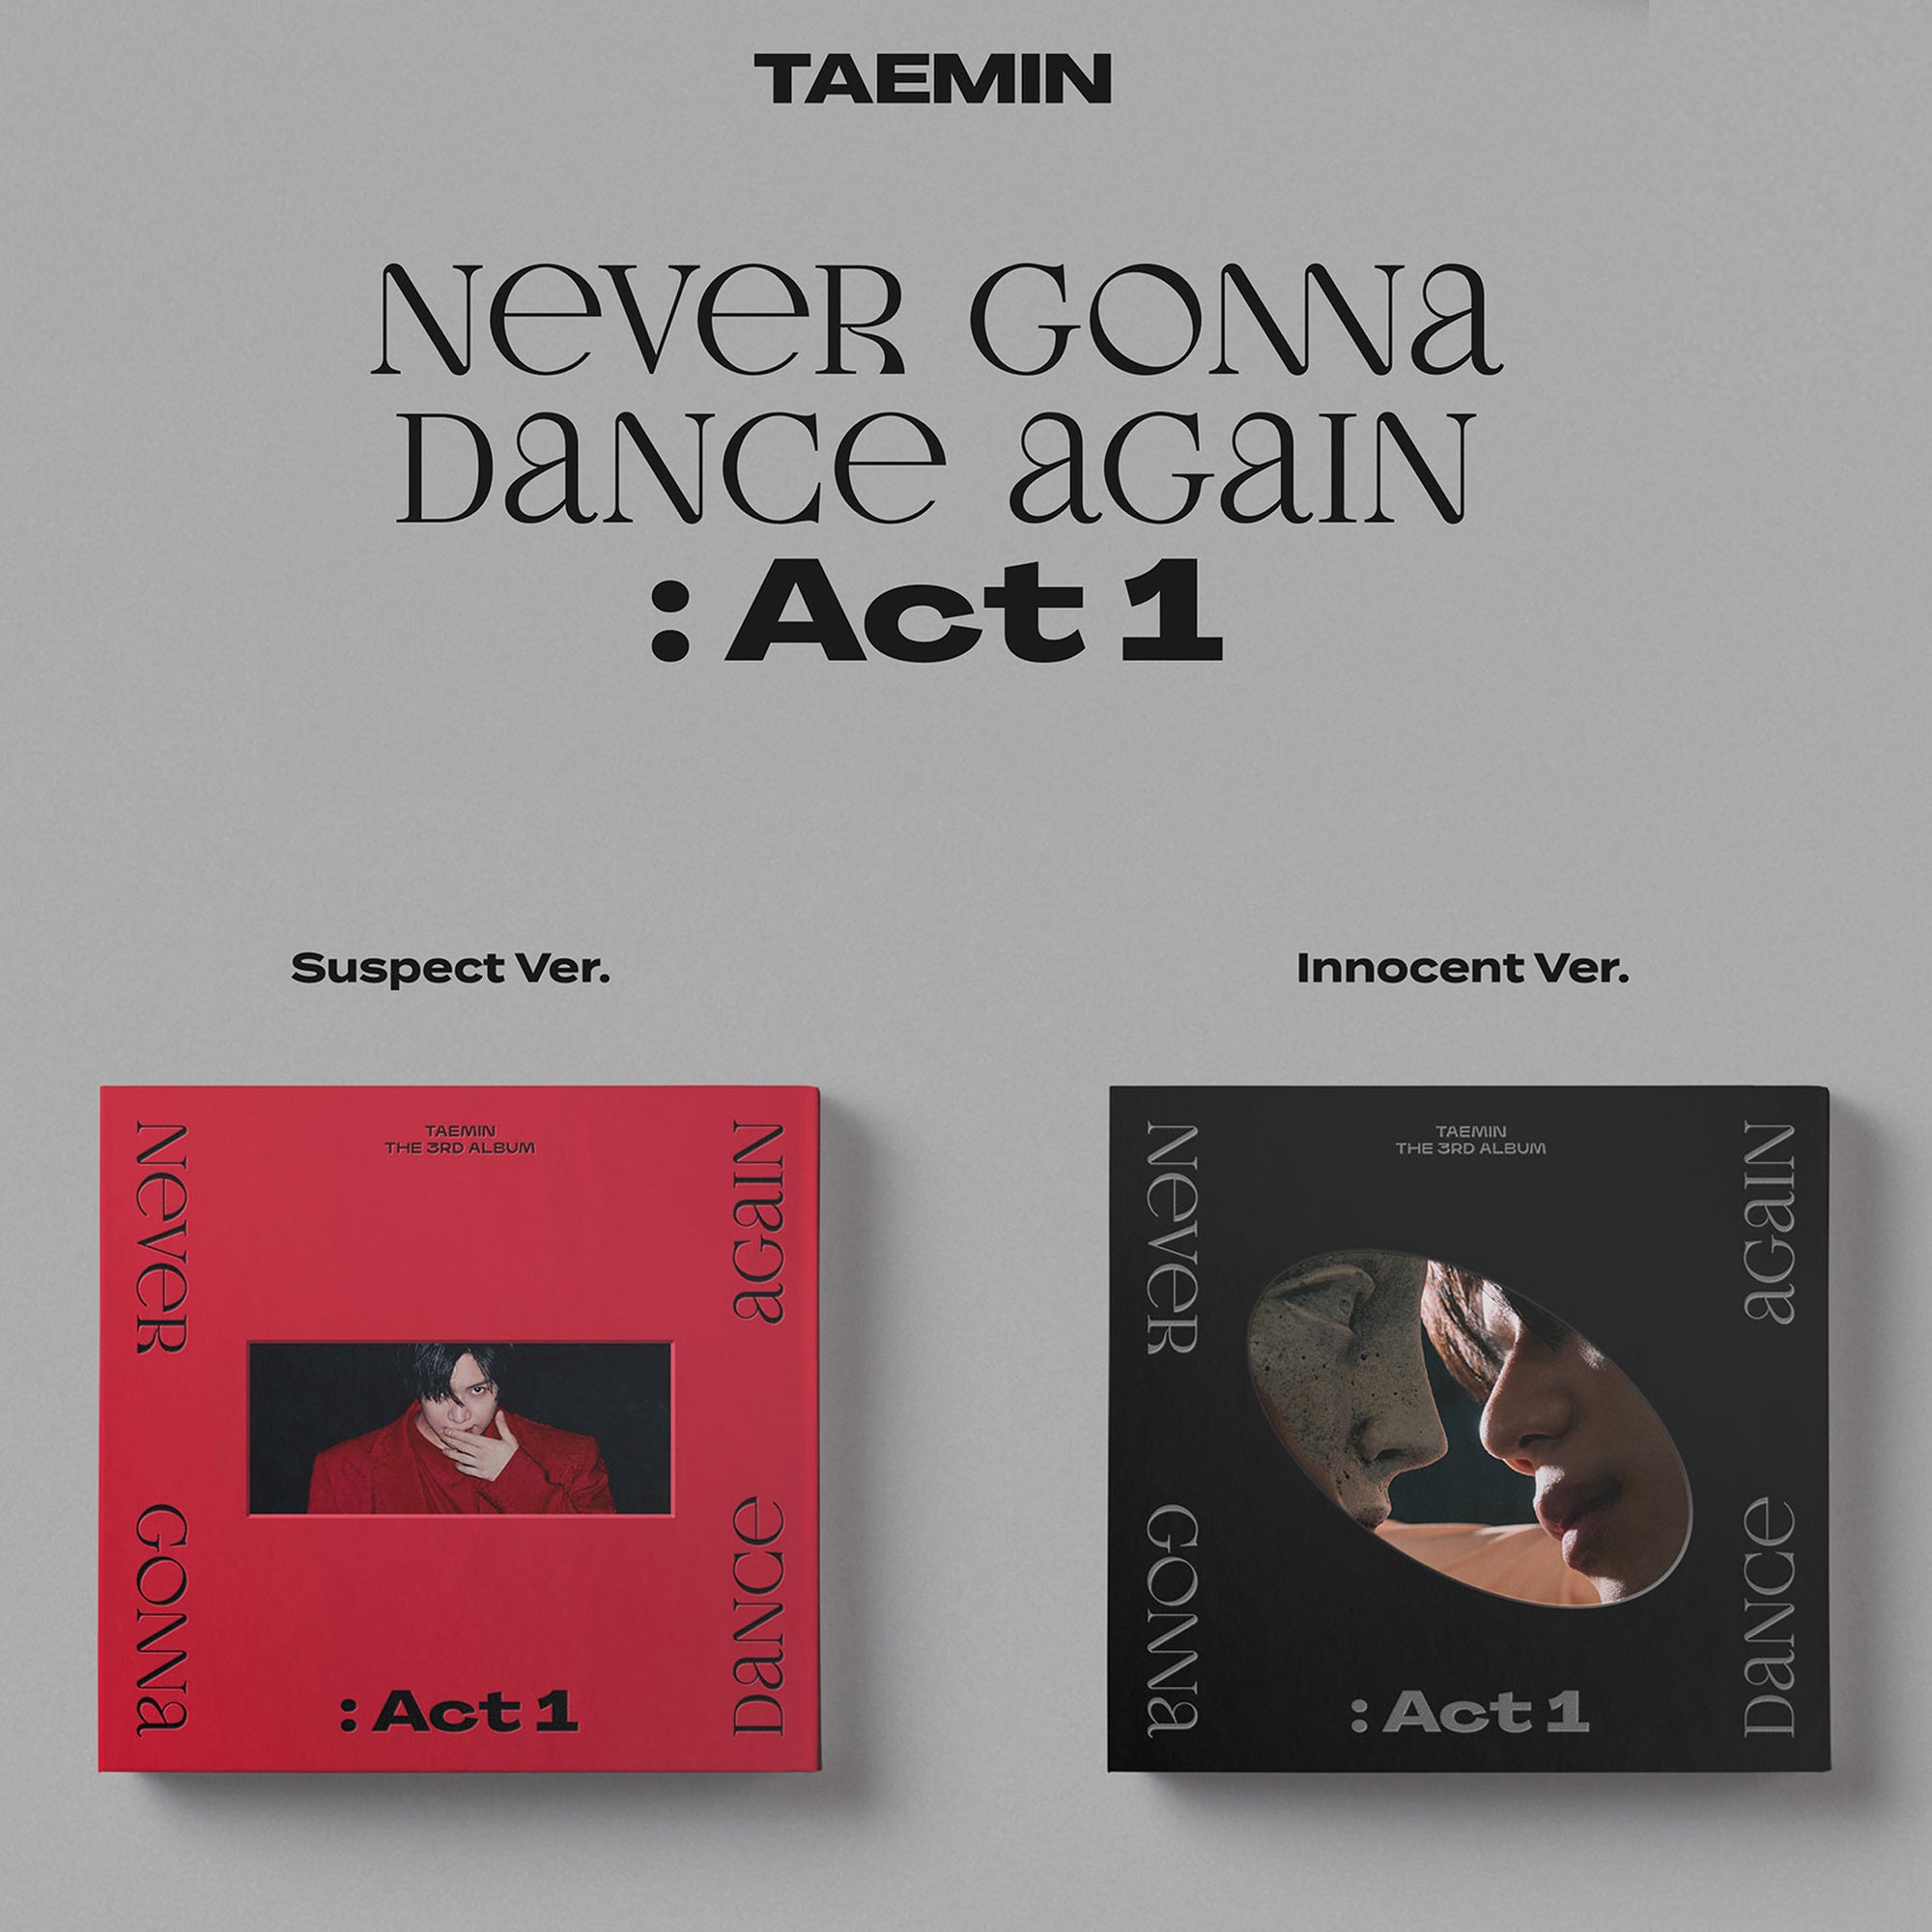 NEVER GONNA DANCE AGAIN: ACT 1